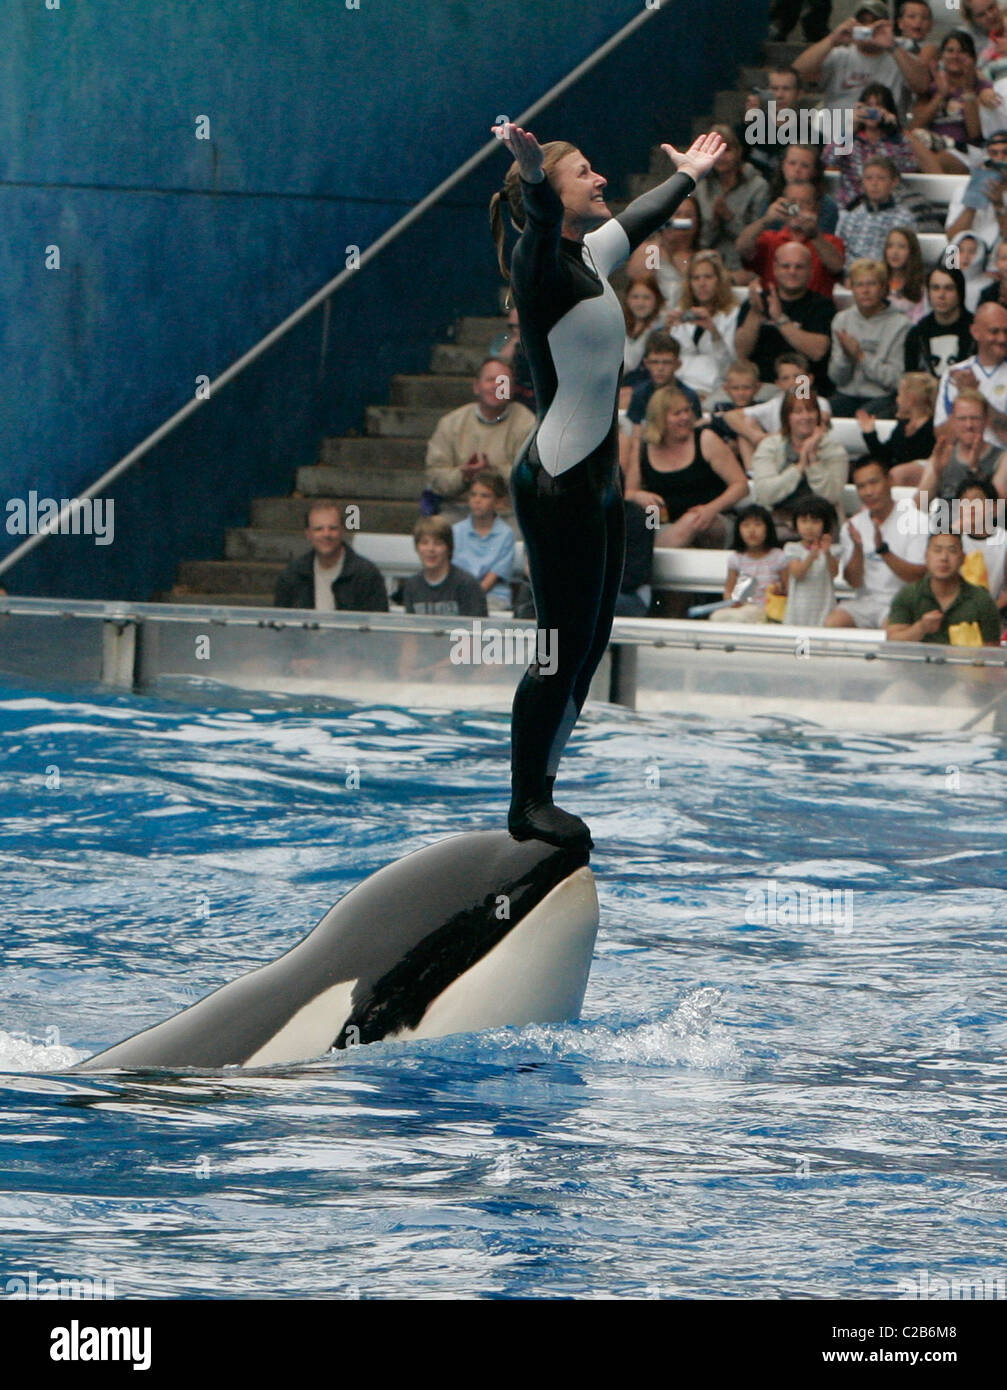 Dawn Brancheau And The Killer Whale Performing Tricks At Seaworld Florida Orlando Florida 04 11 04 Stock Photo Alamy